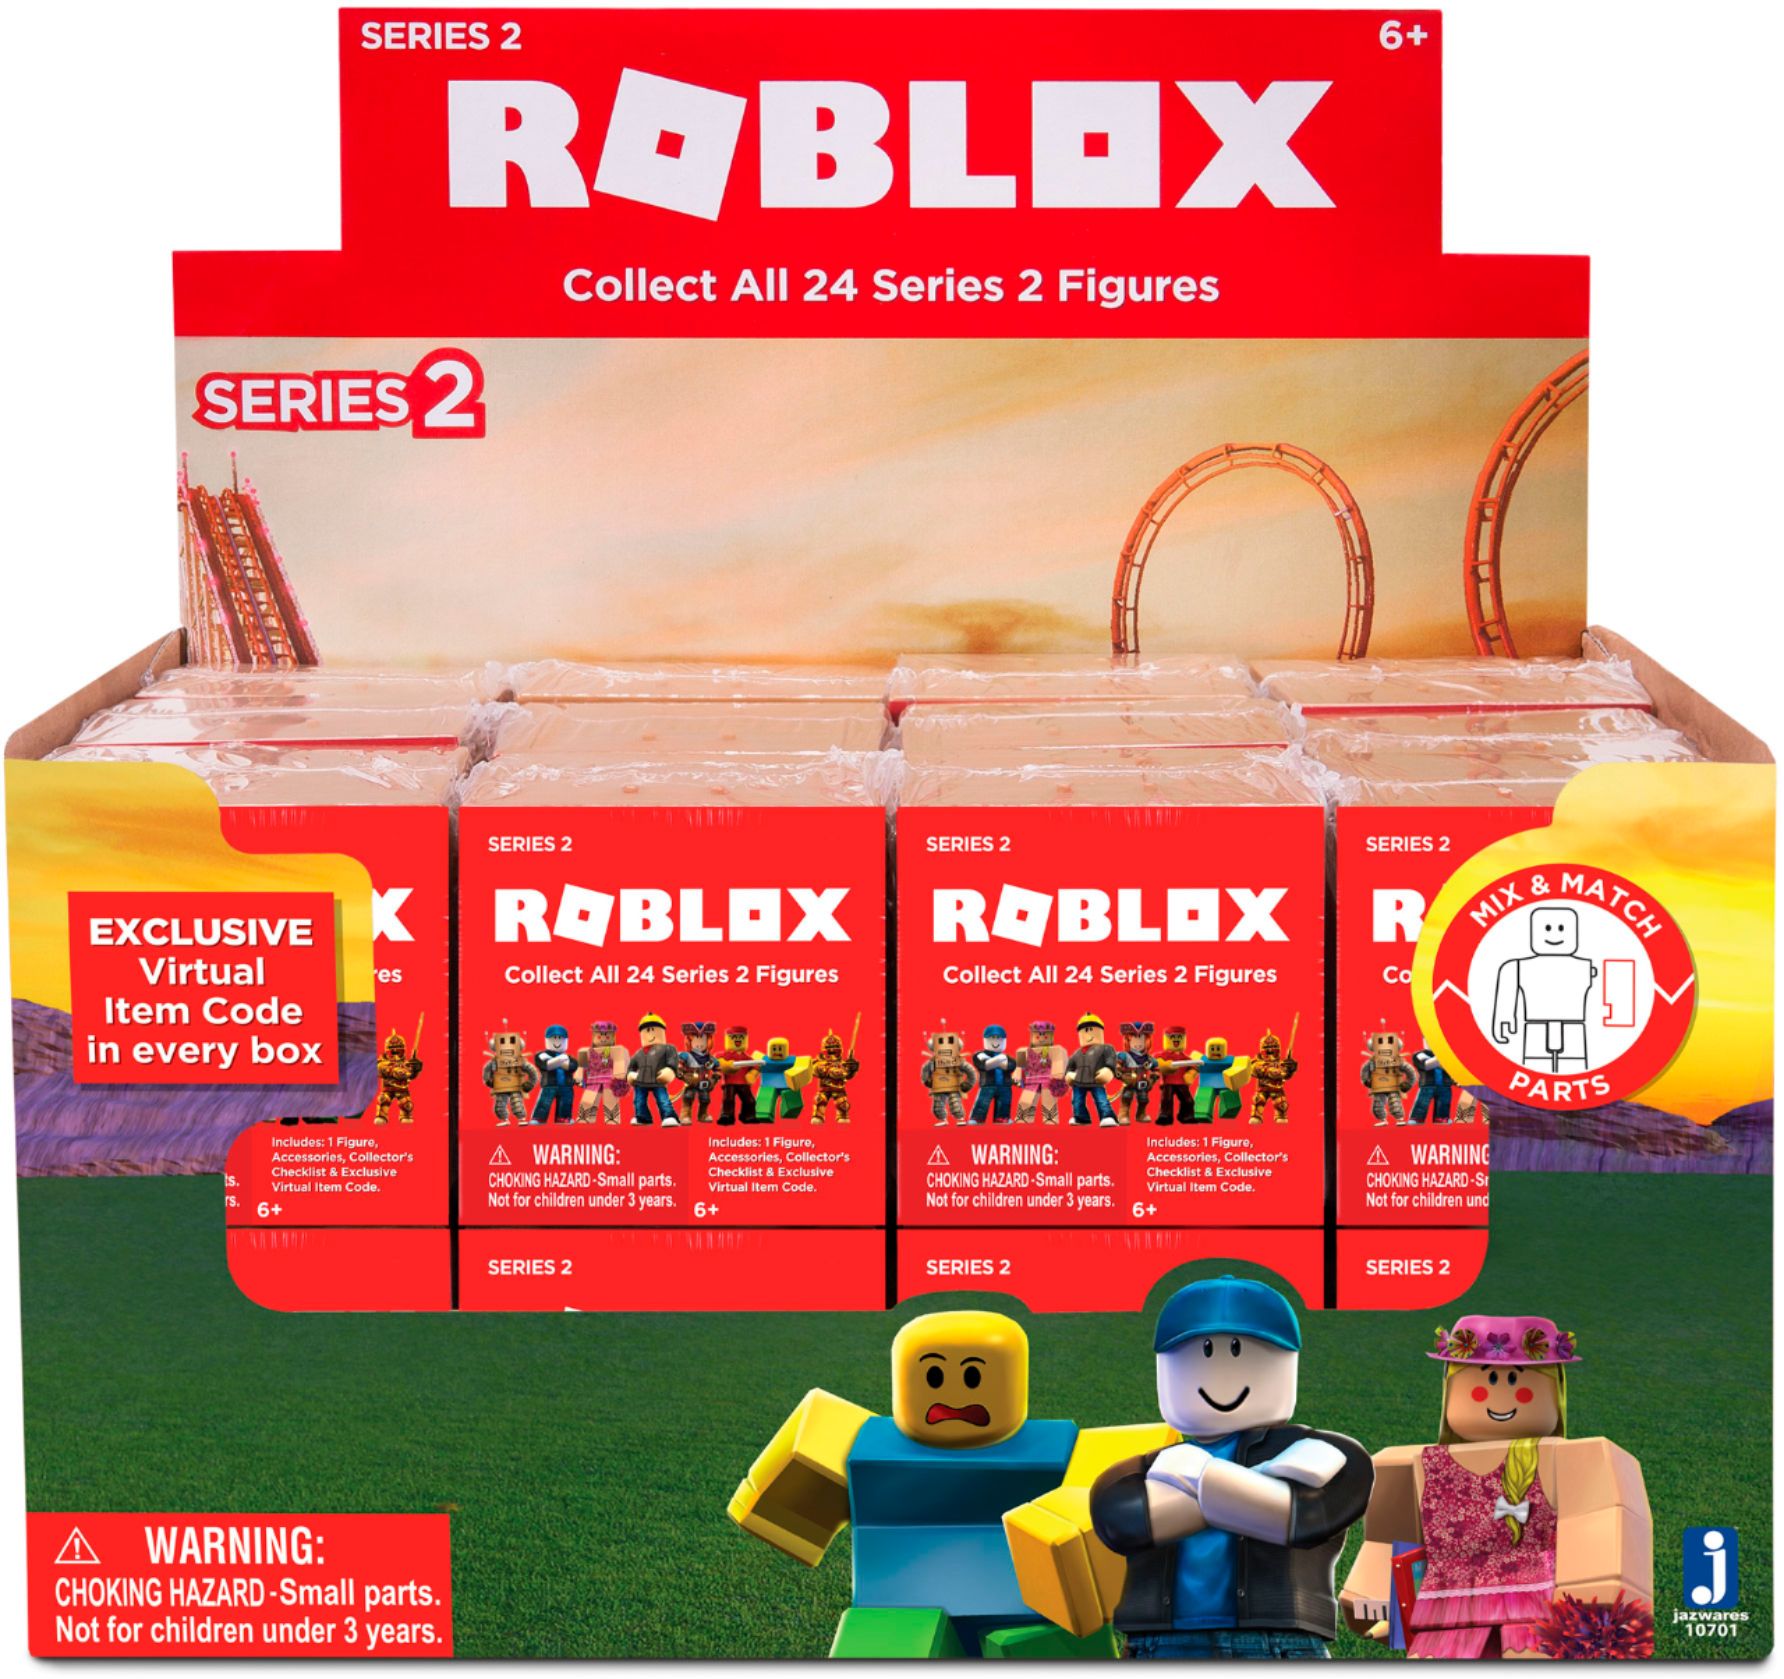 Roblox Series 3 Checklist